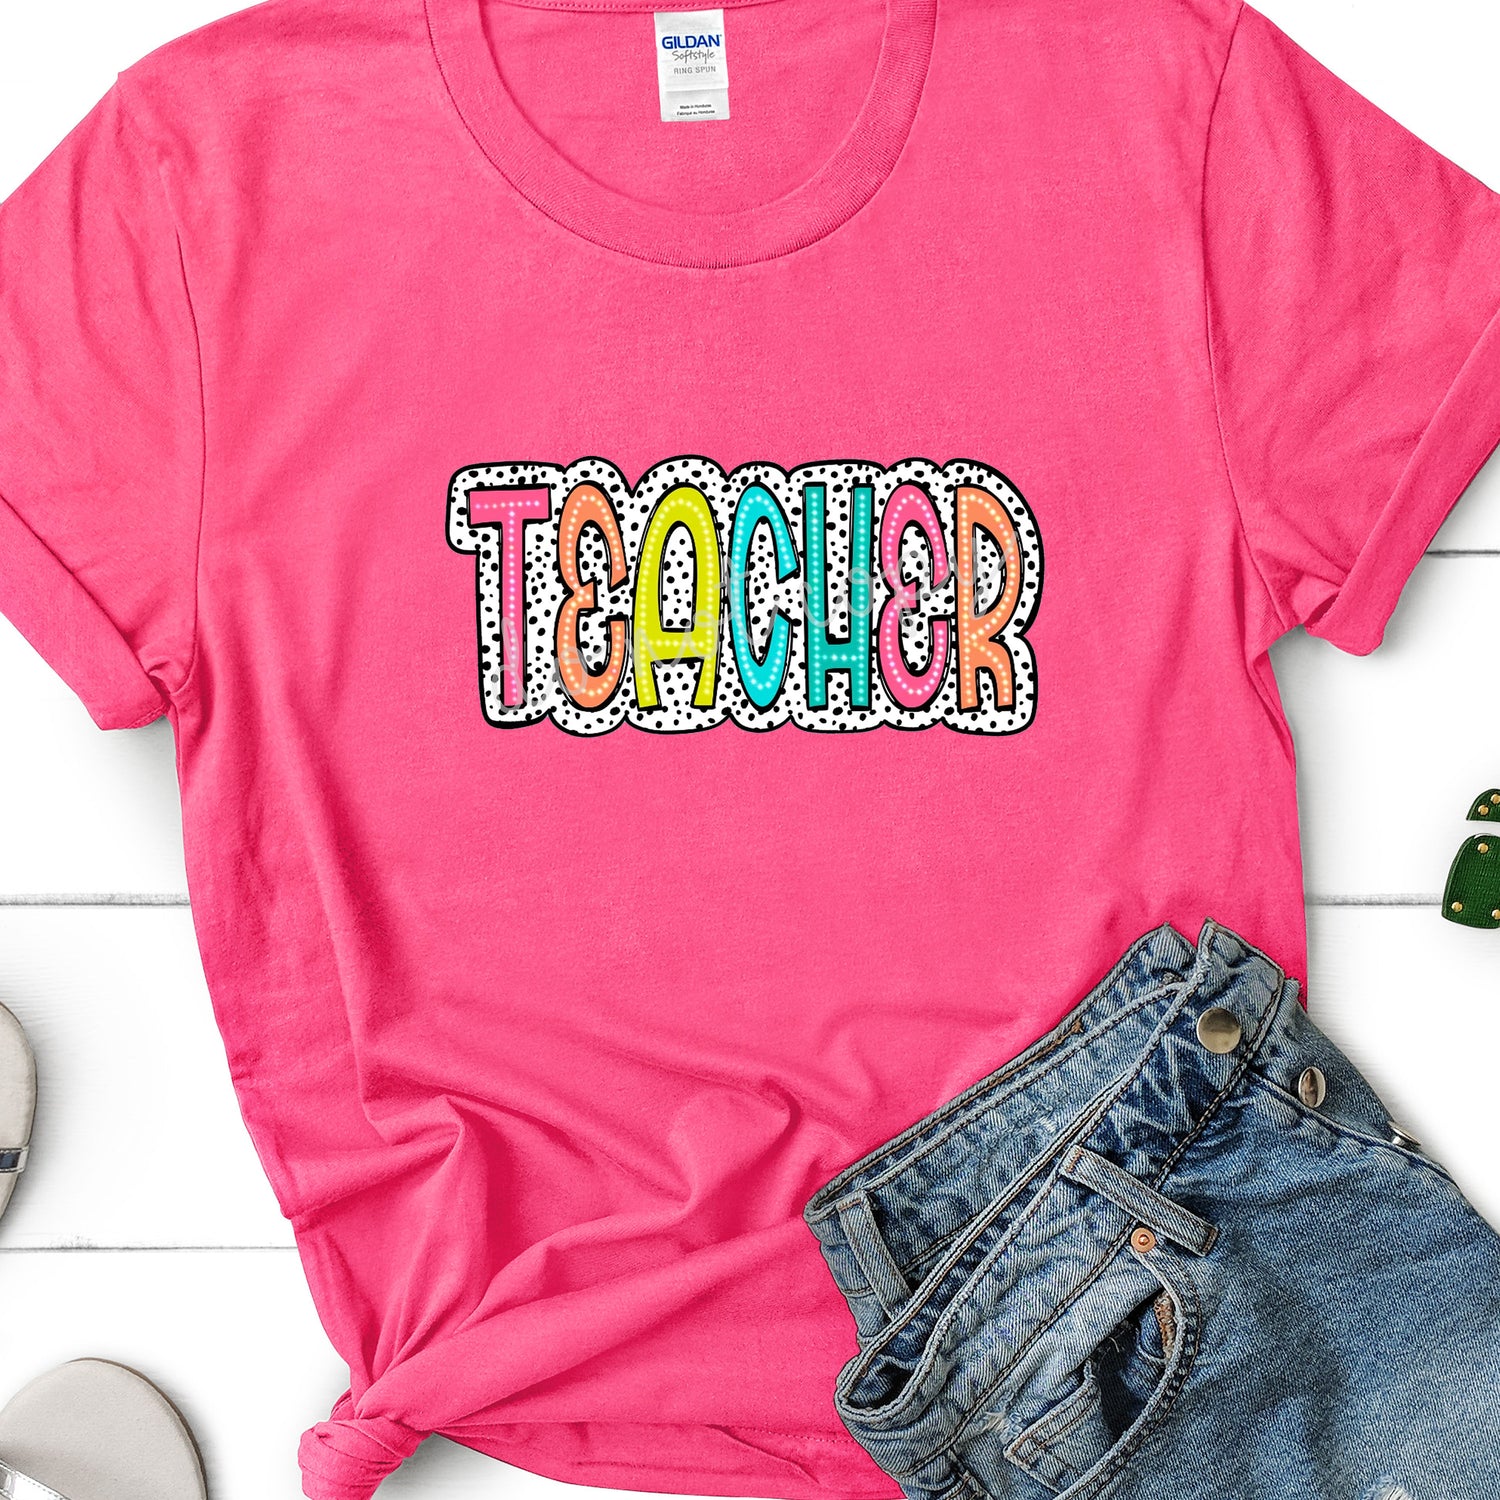 Teacher T-shirt Colorful Neon Dalmatian Design on Pink Shirt - Teacher Appreciation Gift - Back to school shirt Made-in-house!